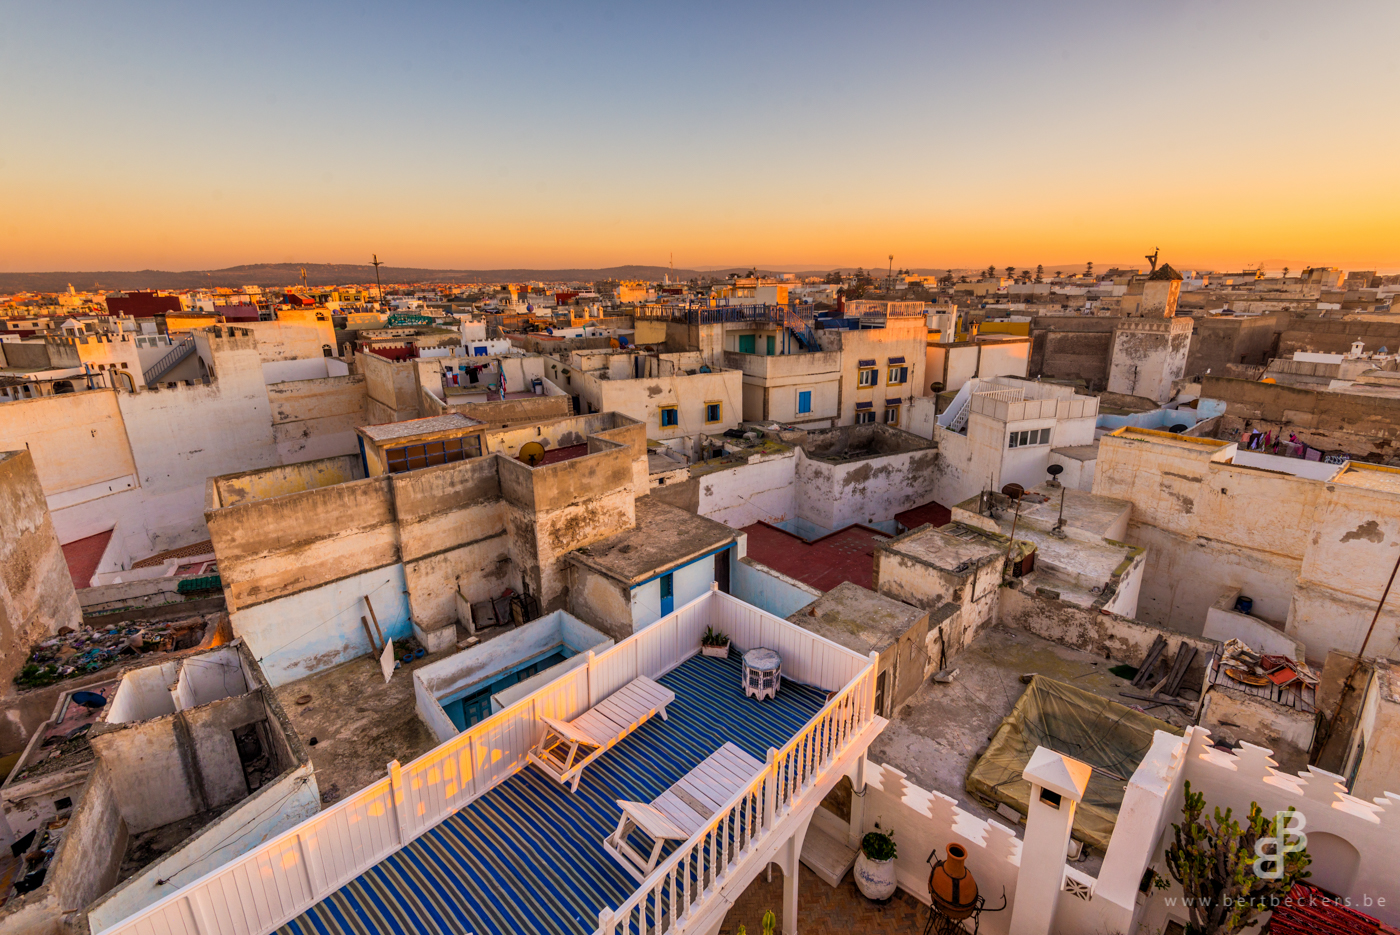 Medina rooftops